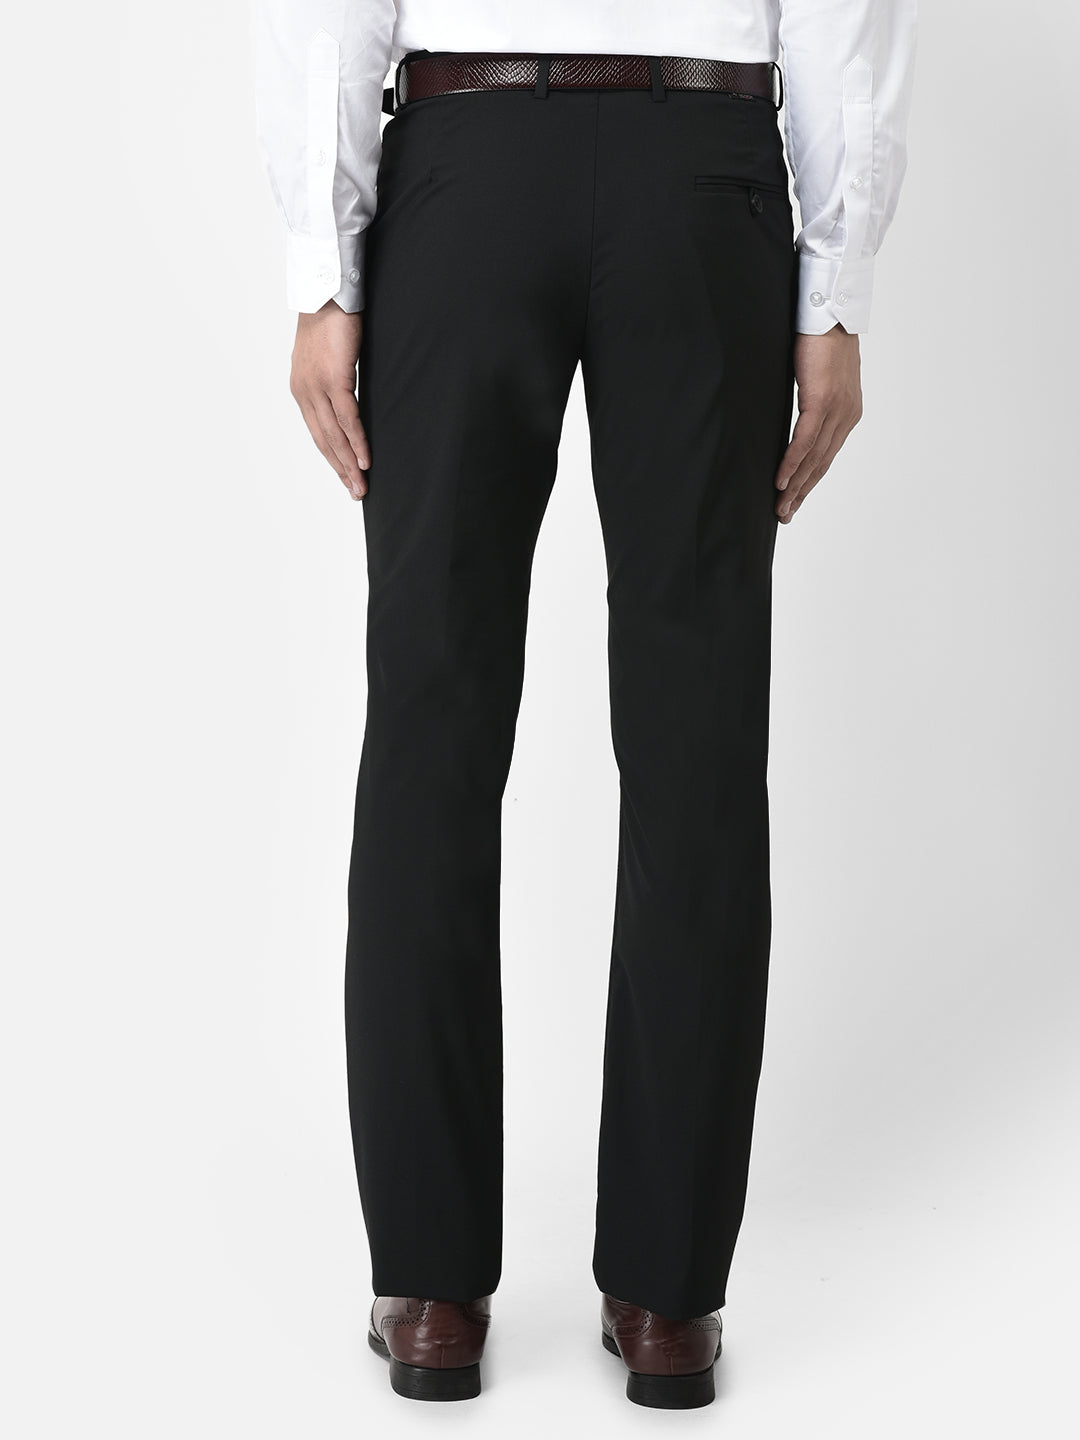 Cobb Black Ultra Fit Formal Trouser